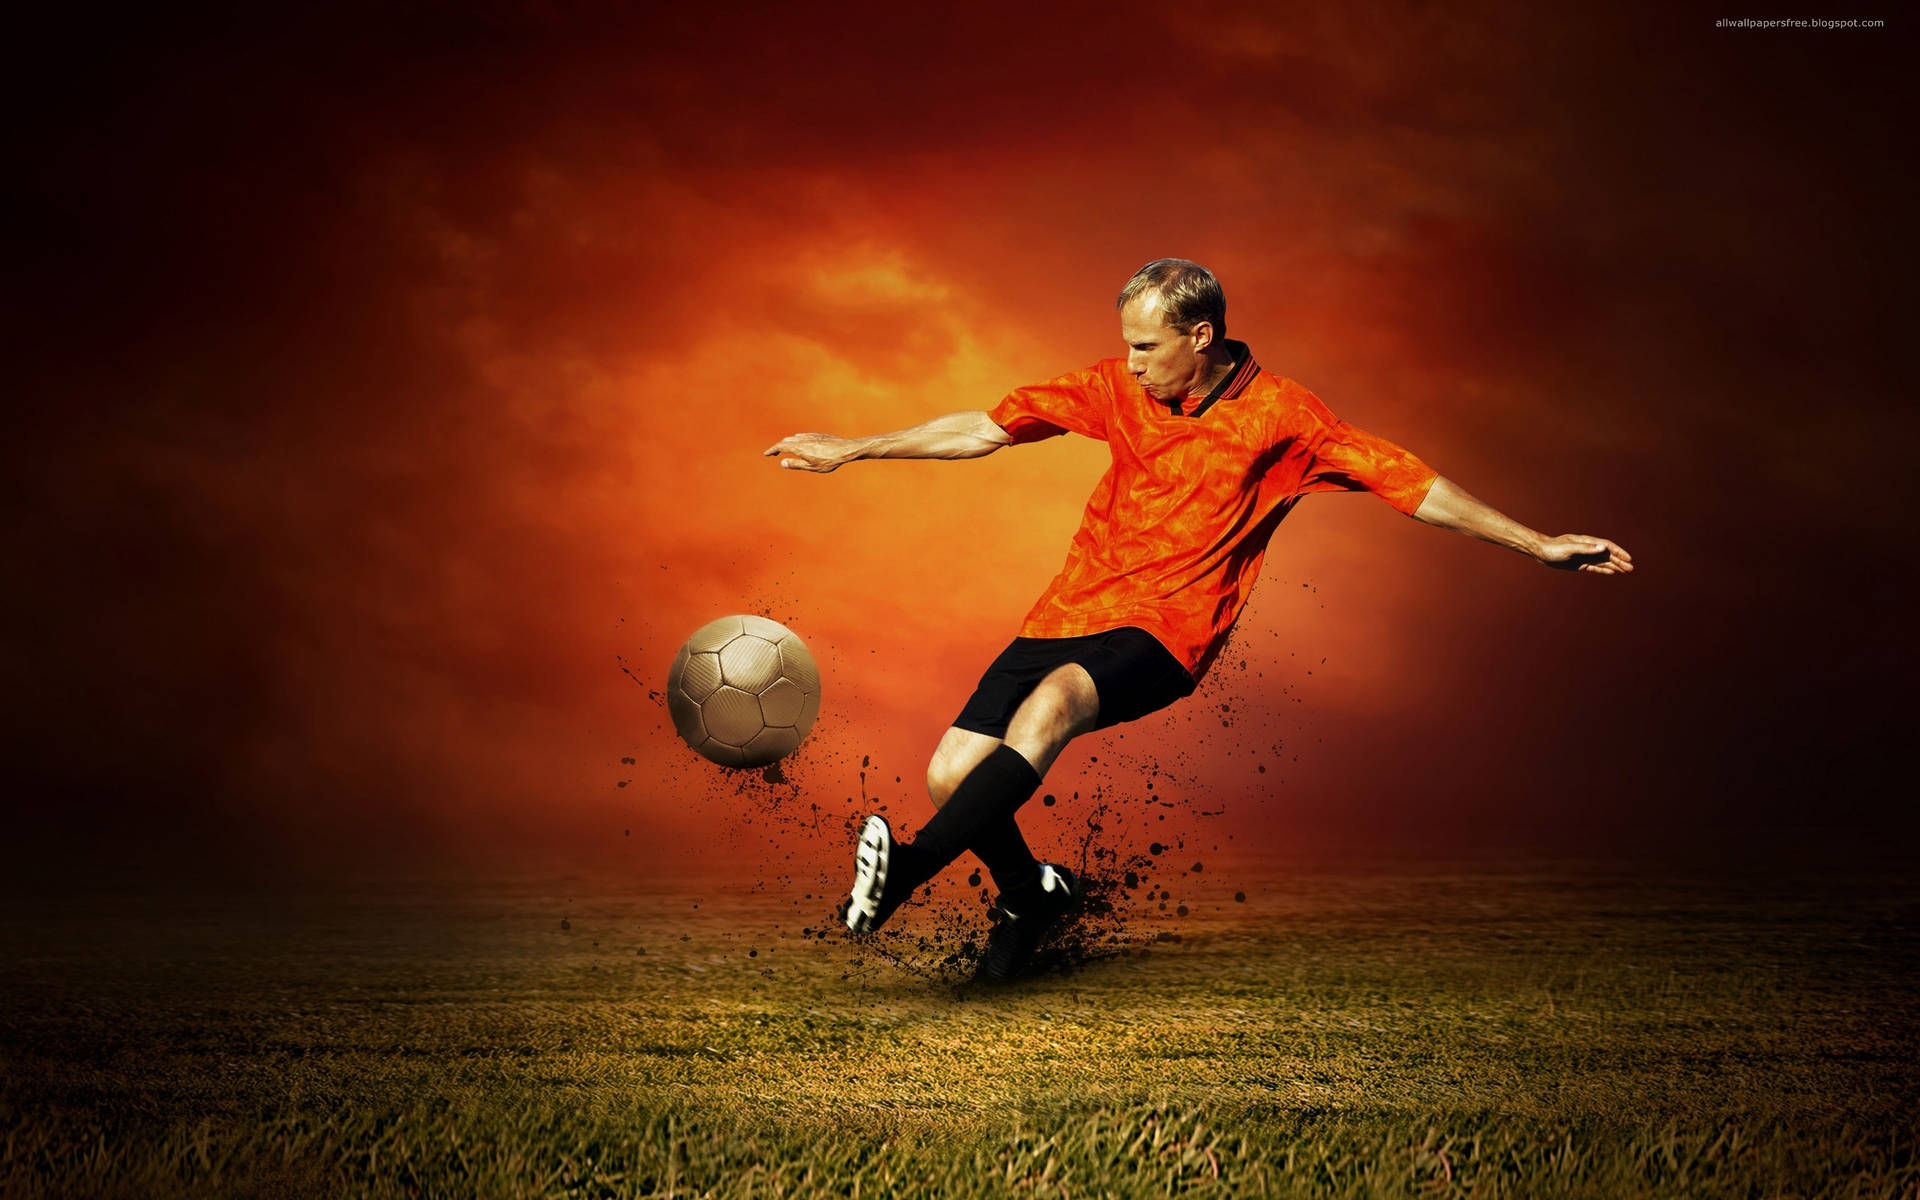 Cool Soccer Player Orange